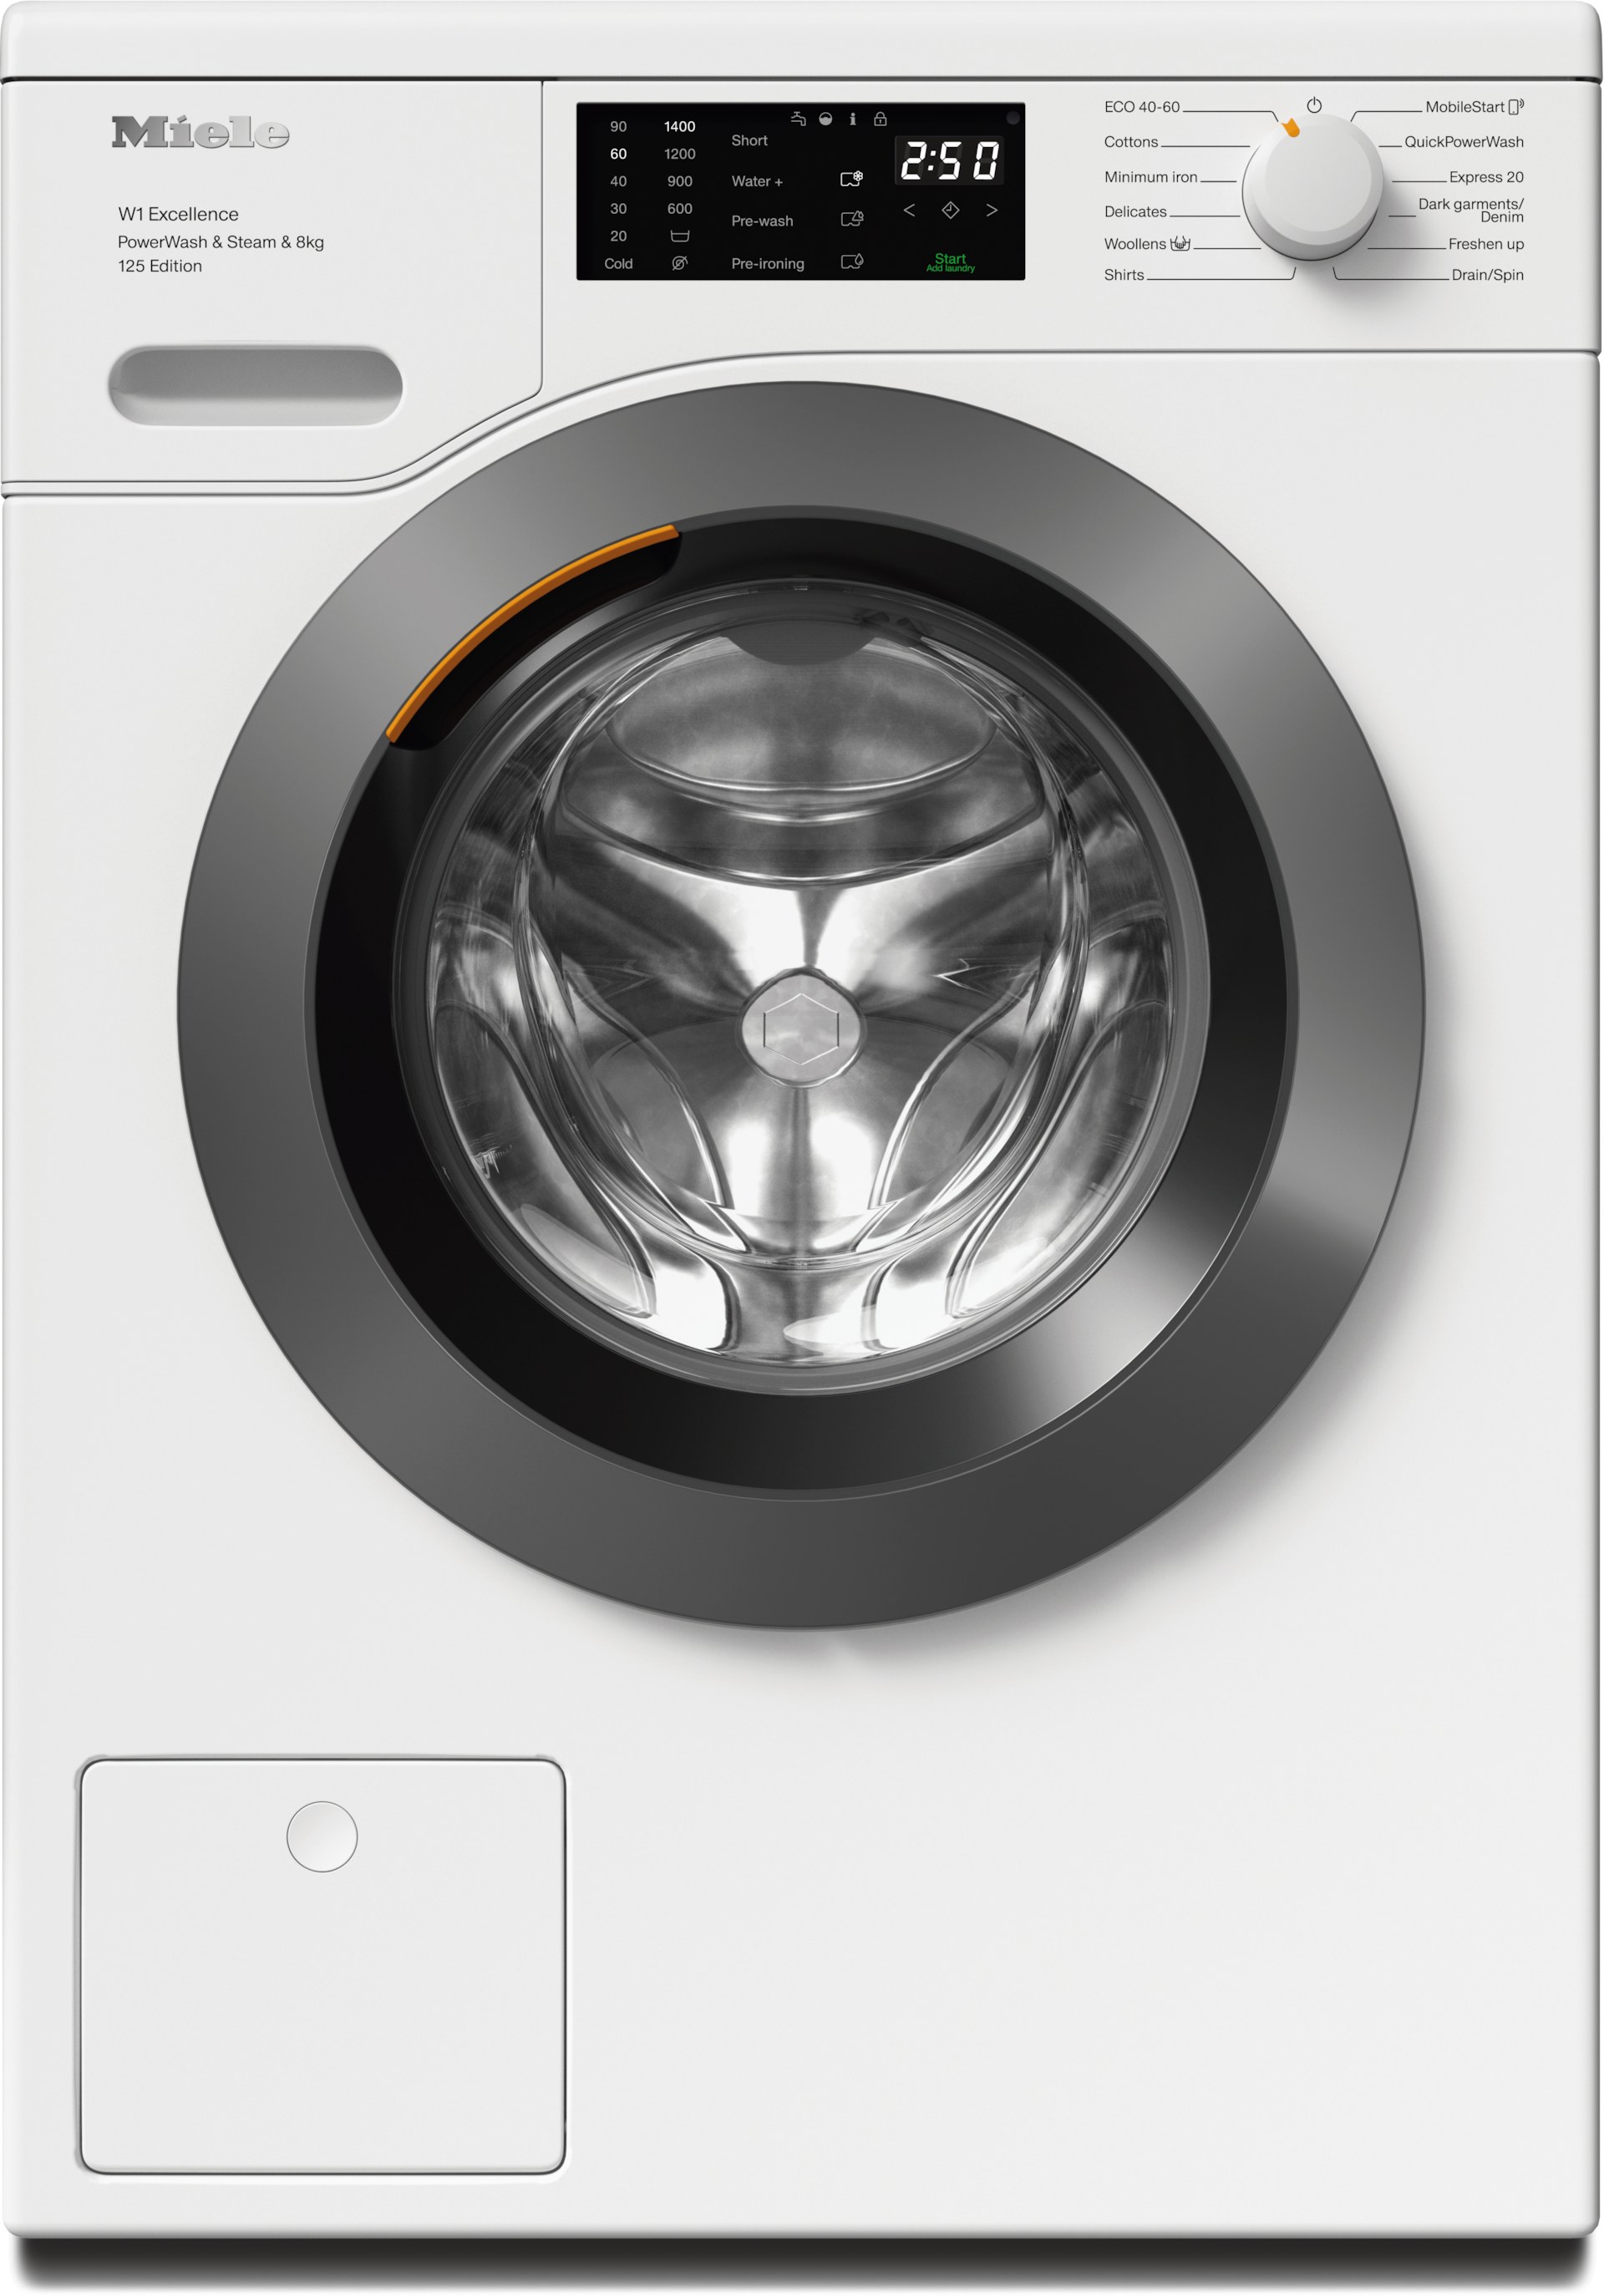 Washing machines - WEB385 WCS 125 Edition Lotus white - 1